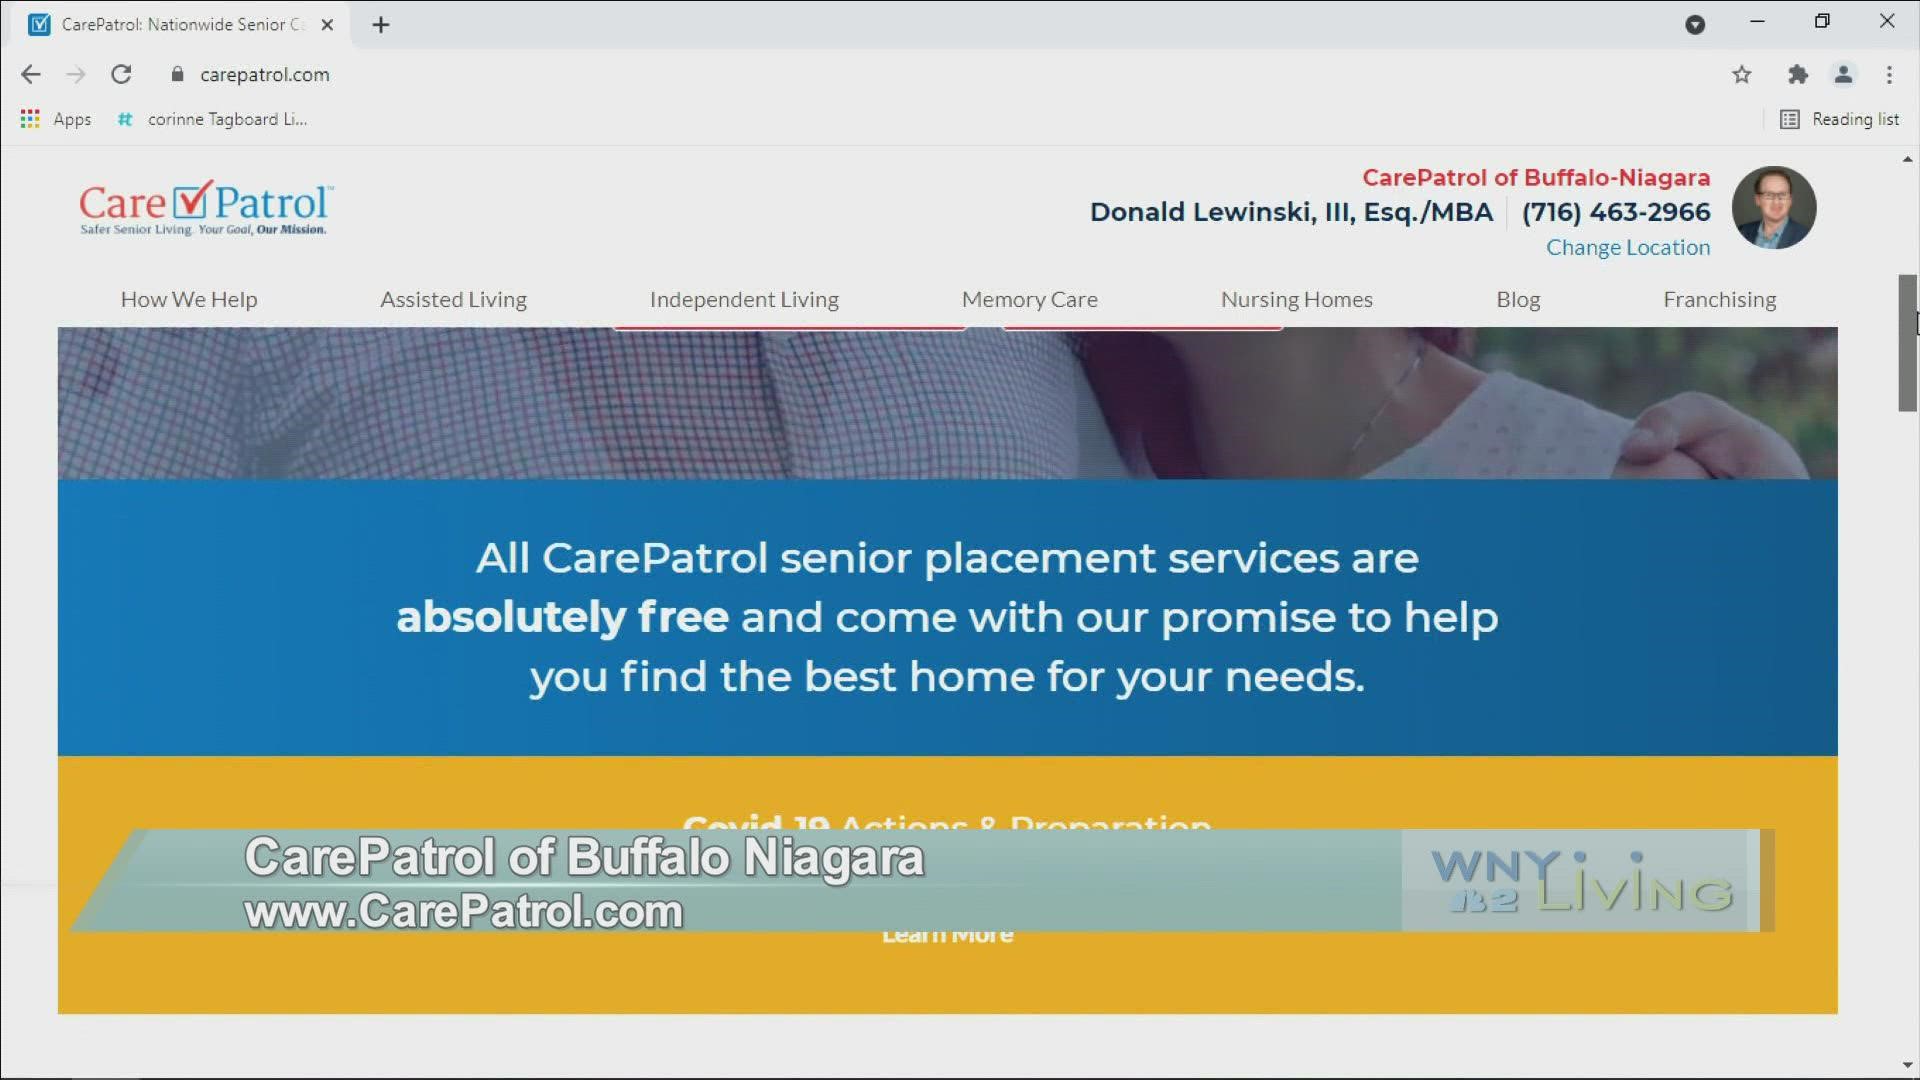 WNY Living - September 18 - CarePatrol of Buffalo Niagara (THIS VIDEO IS SPONSORED BY CAREPATROL OF BUFFALO NIAGARA)